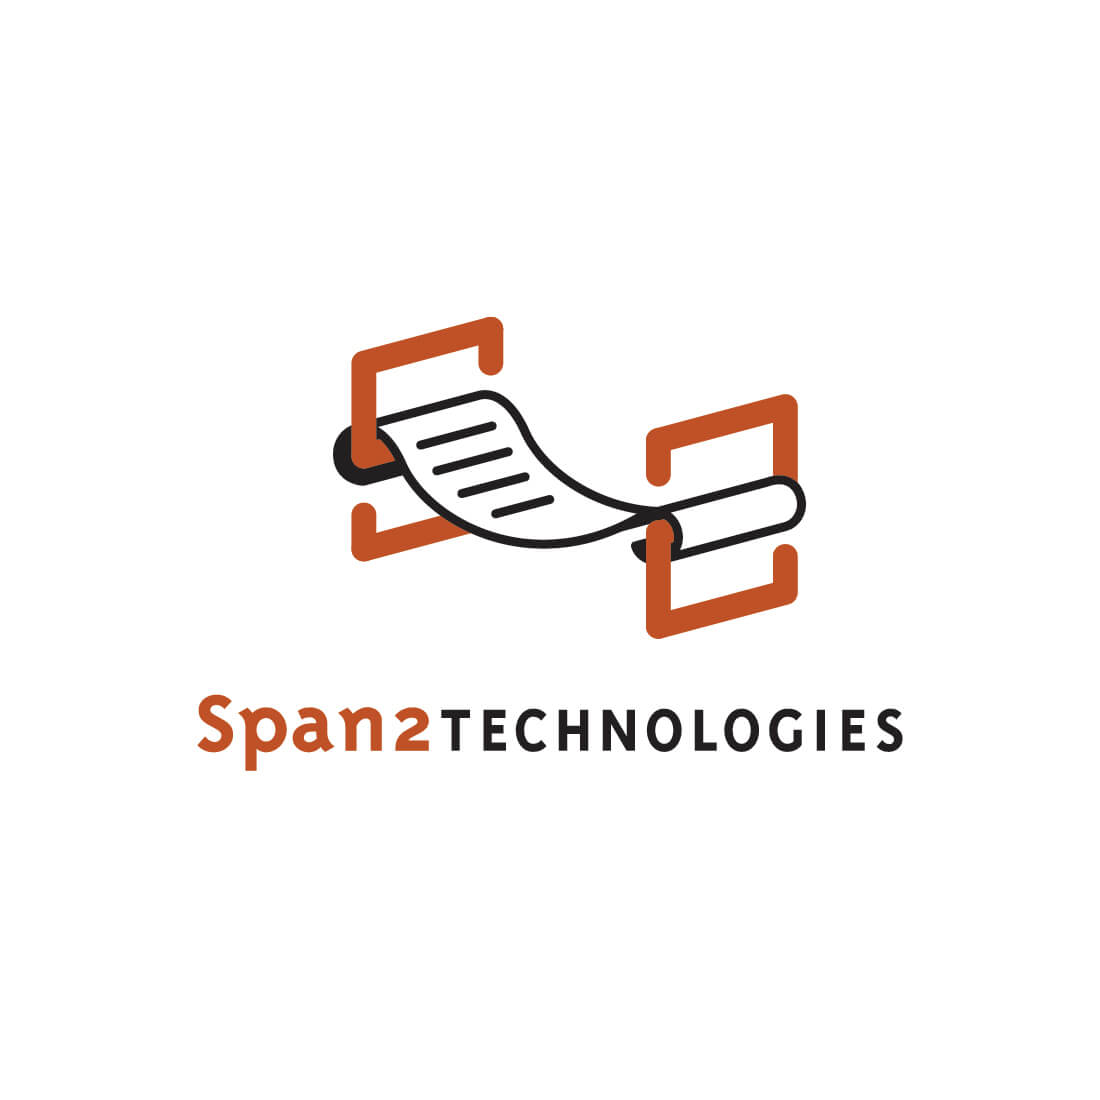 Span 2 Technologies